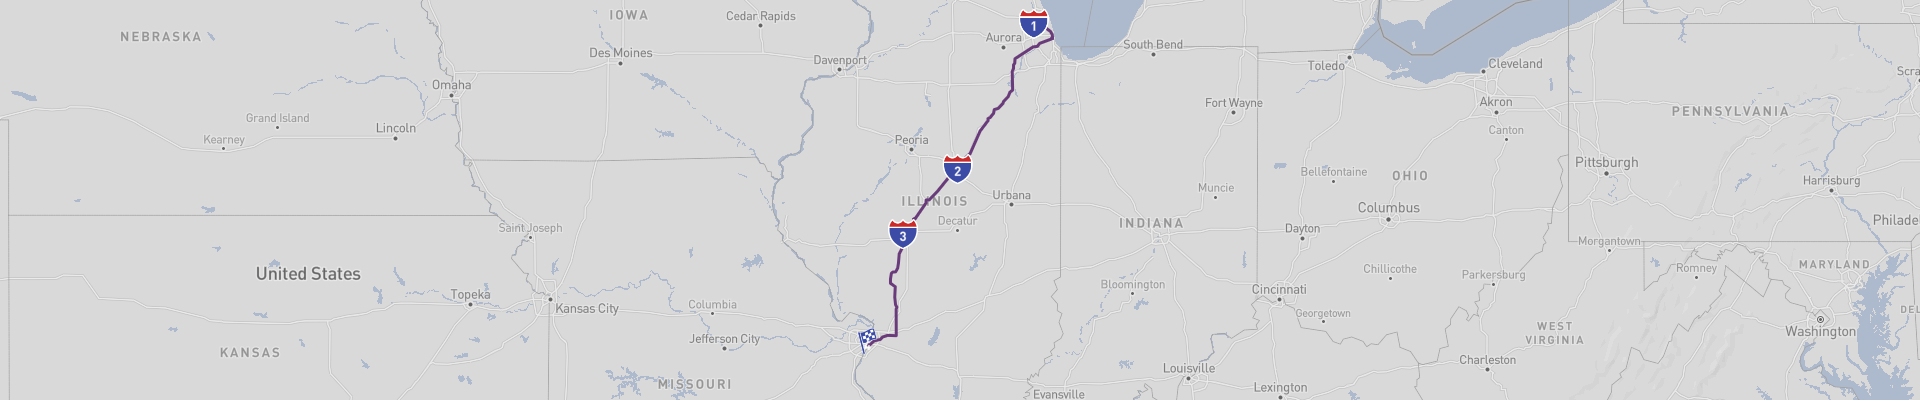 Illinois Historic Route 66 Road Trip